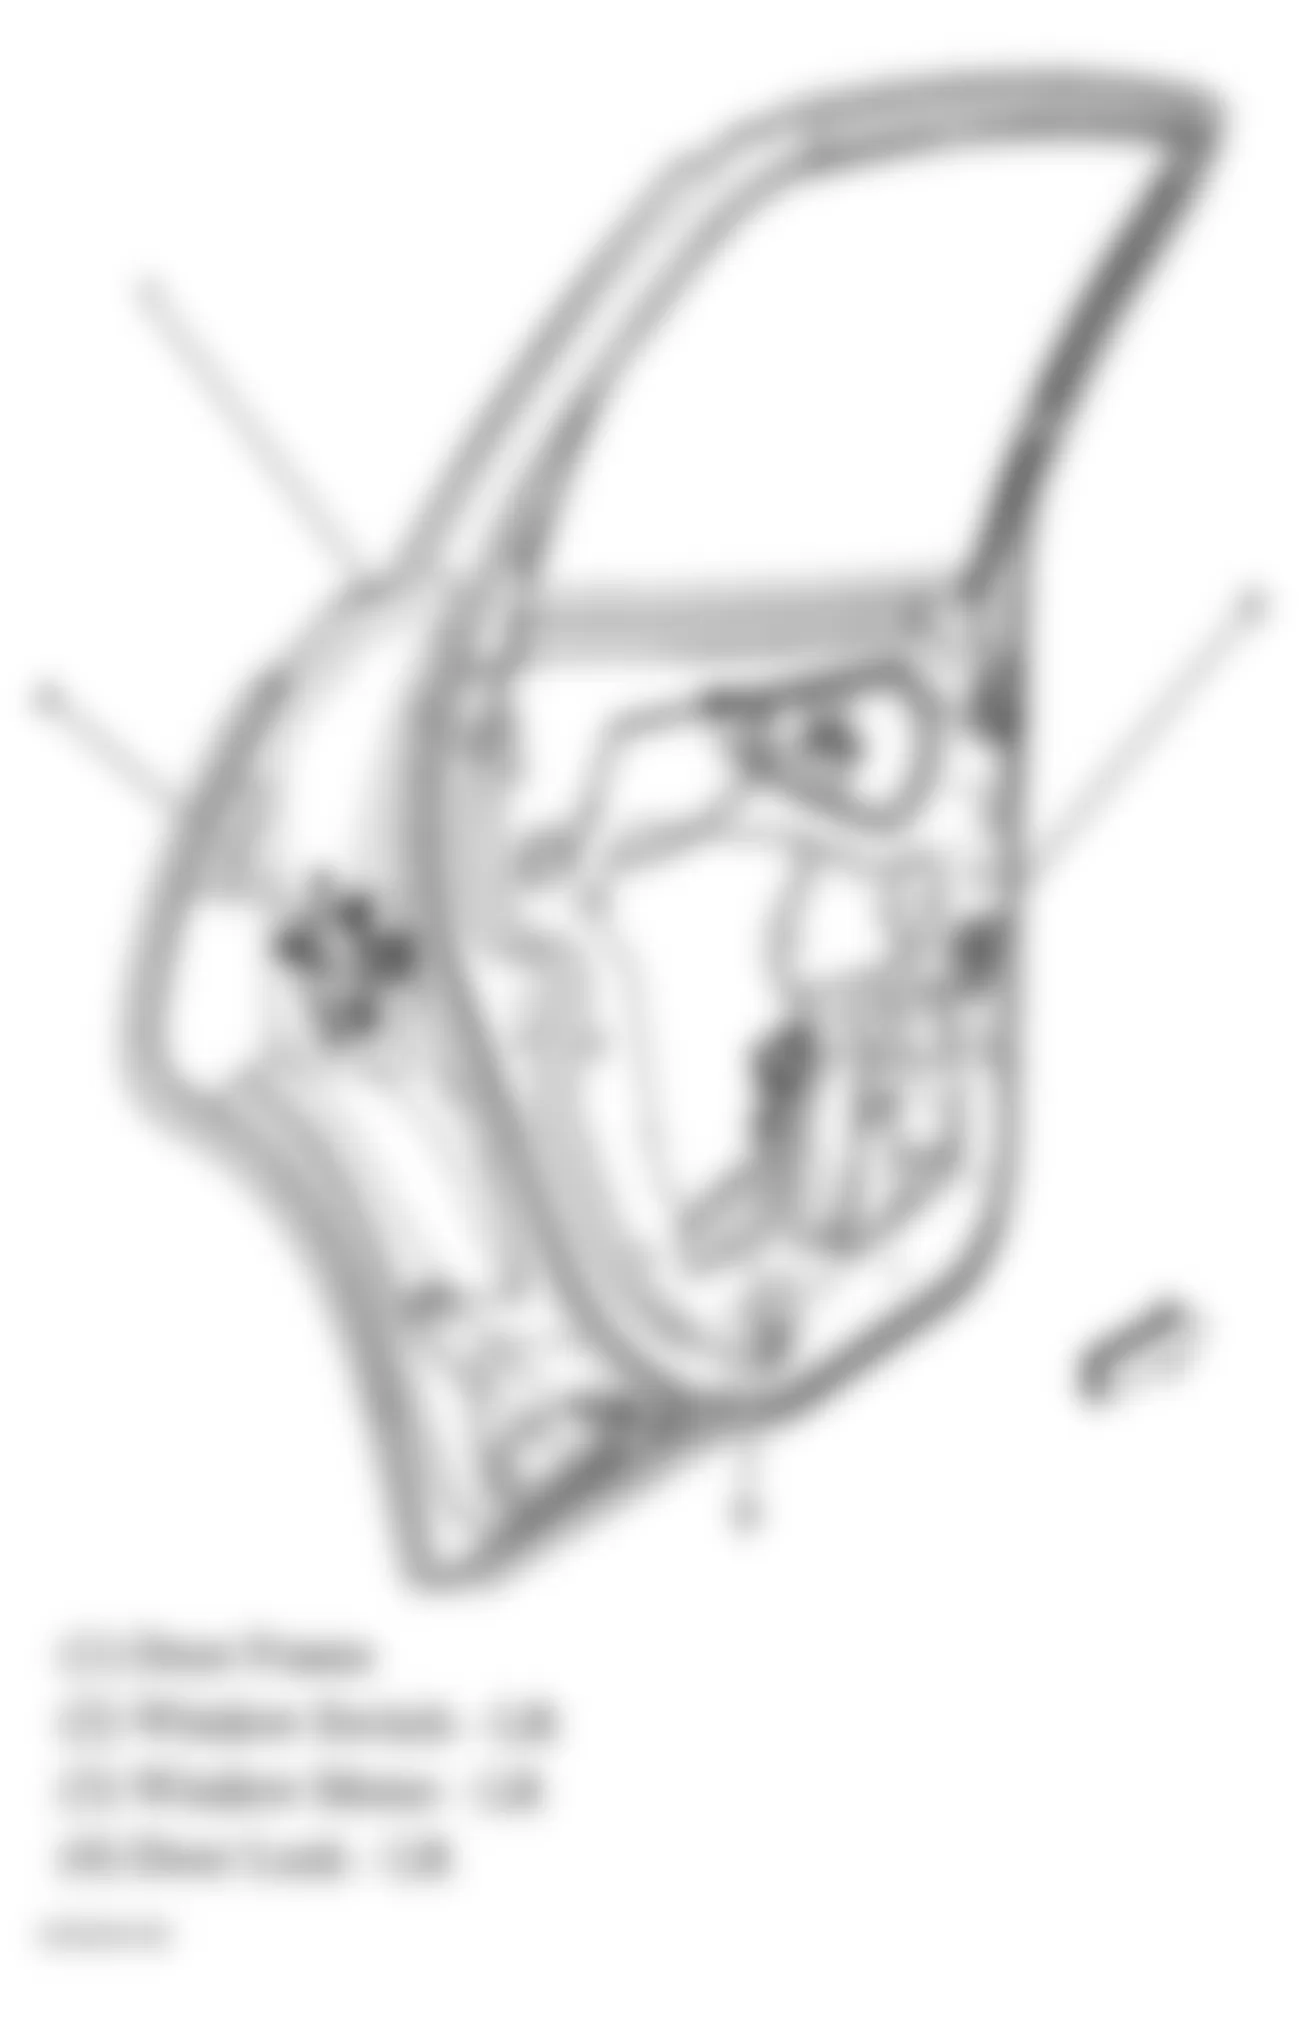 Buick Allure CXL 2008 - Component Locations -  Left Rear Door